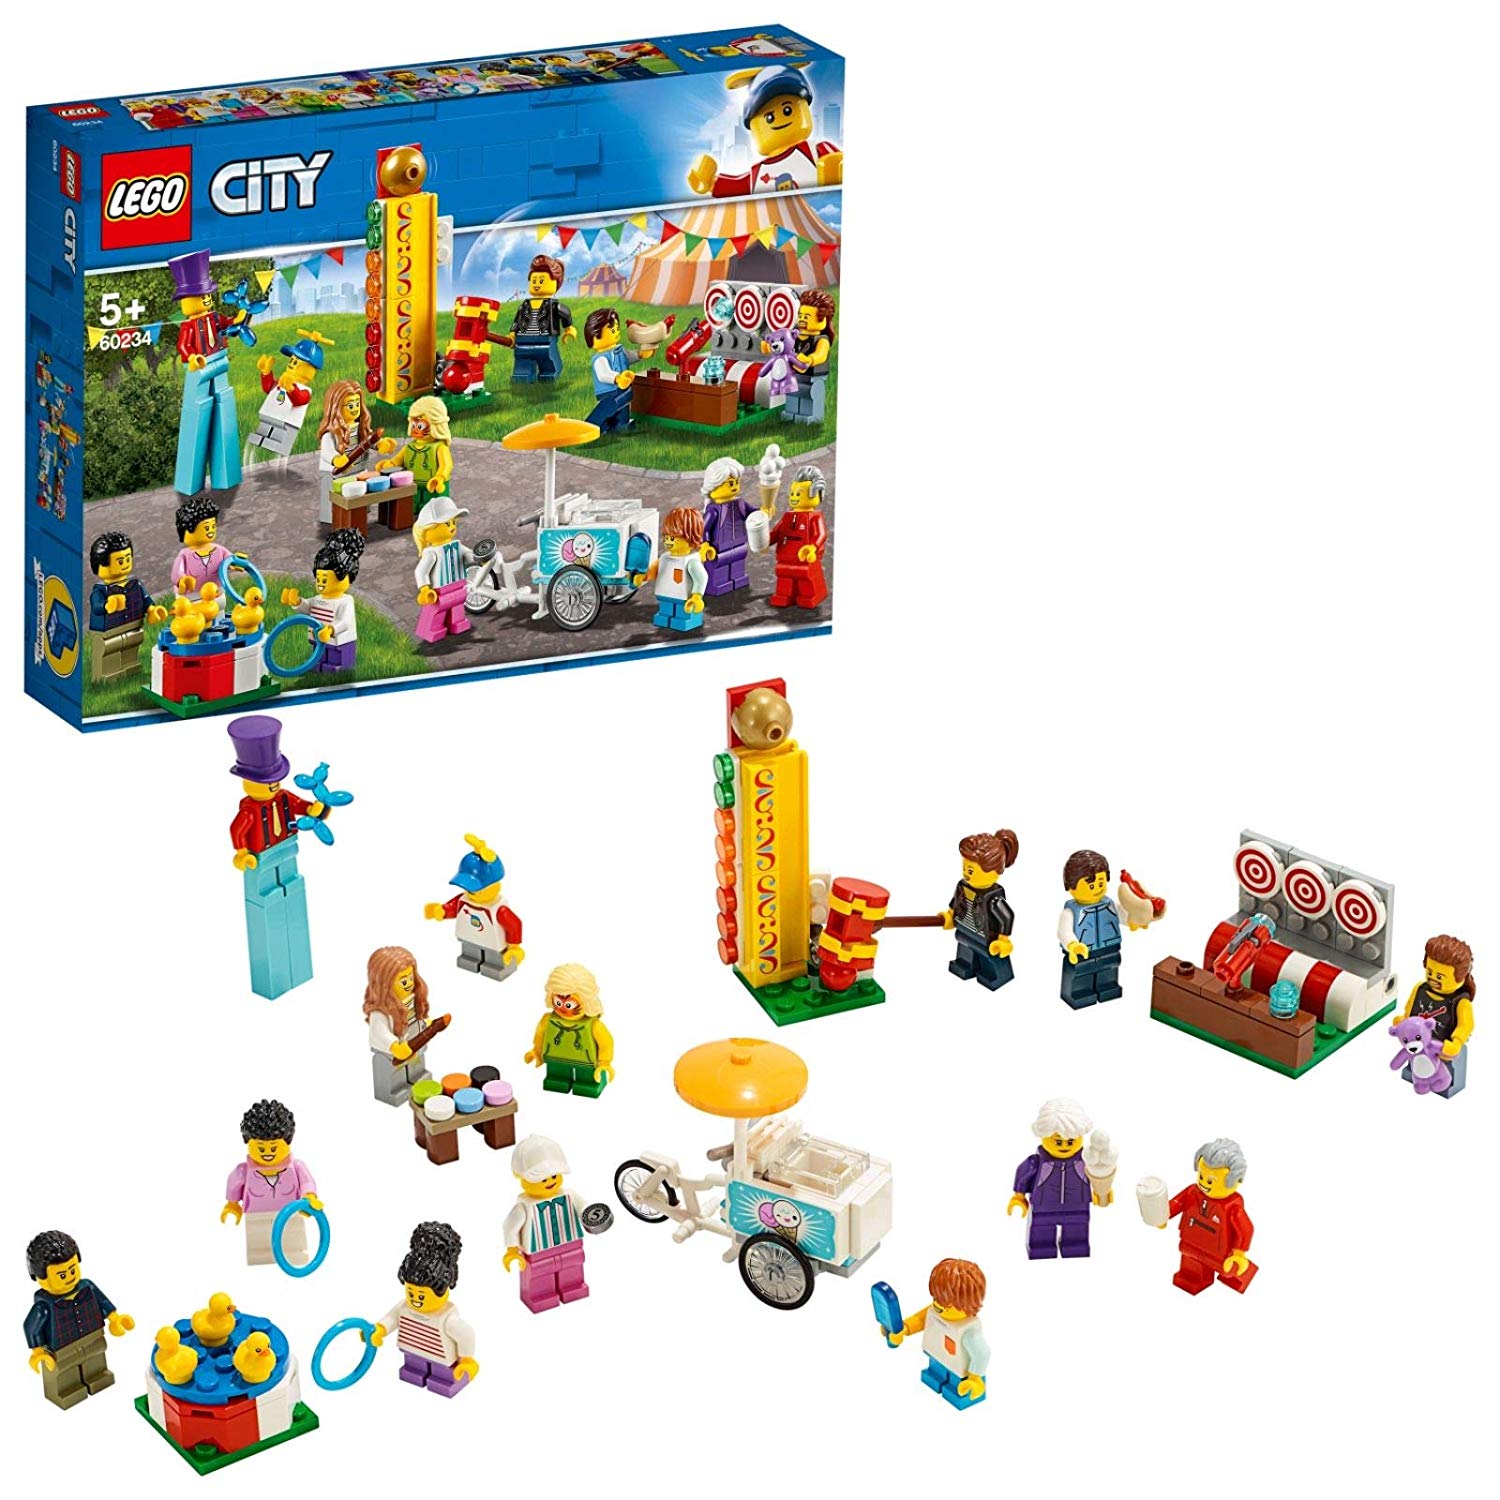 Lego City 60234 - City Dwellers - Fairground